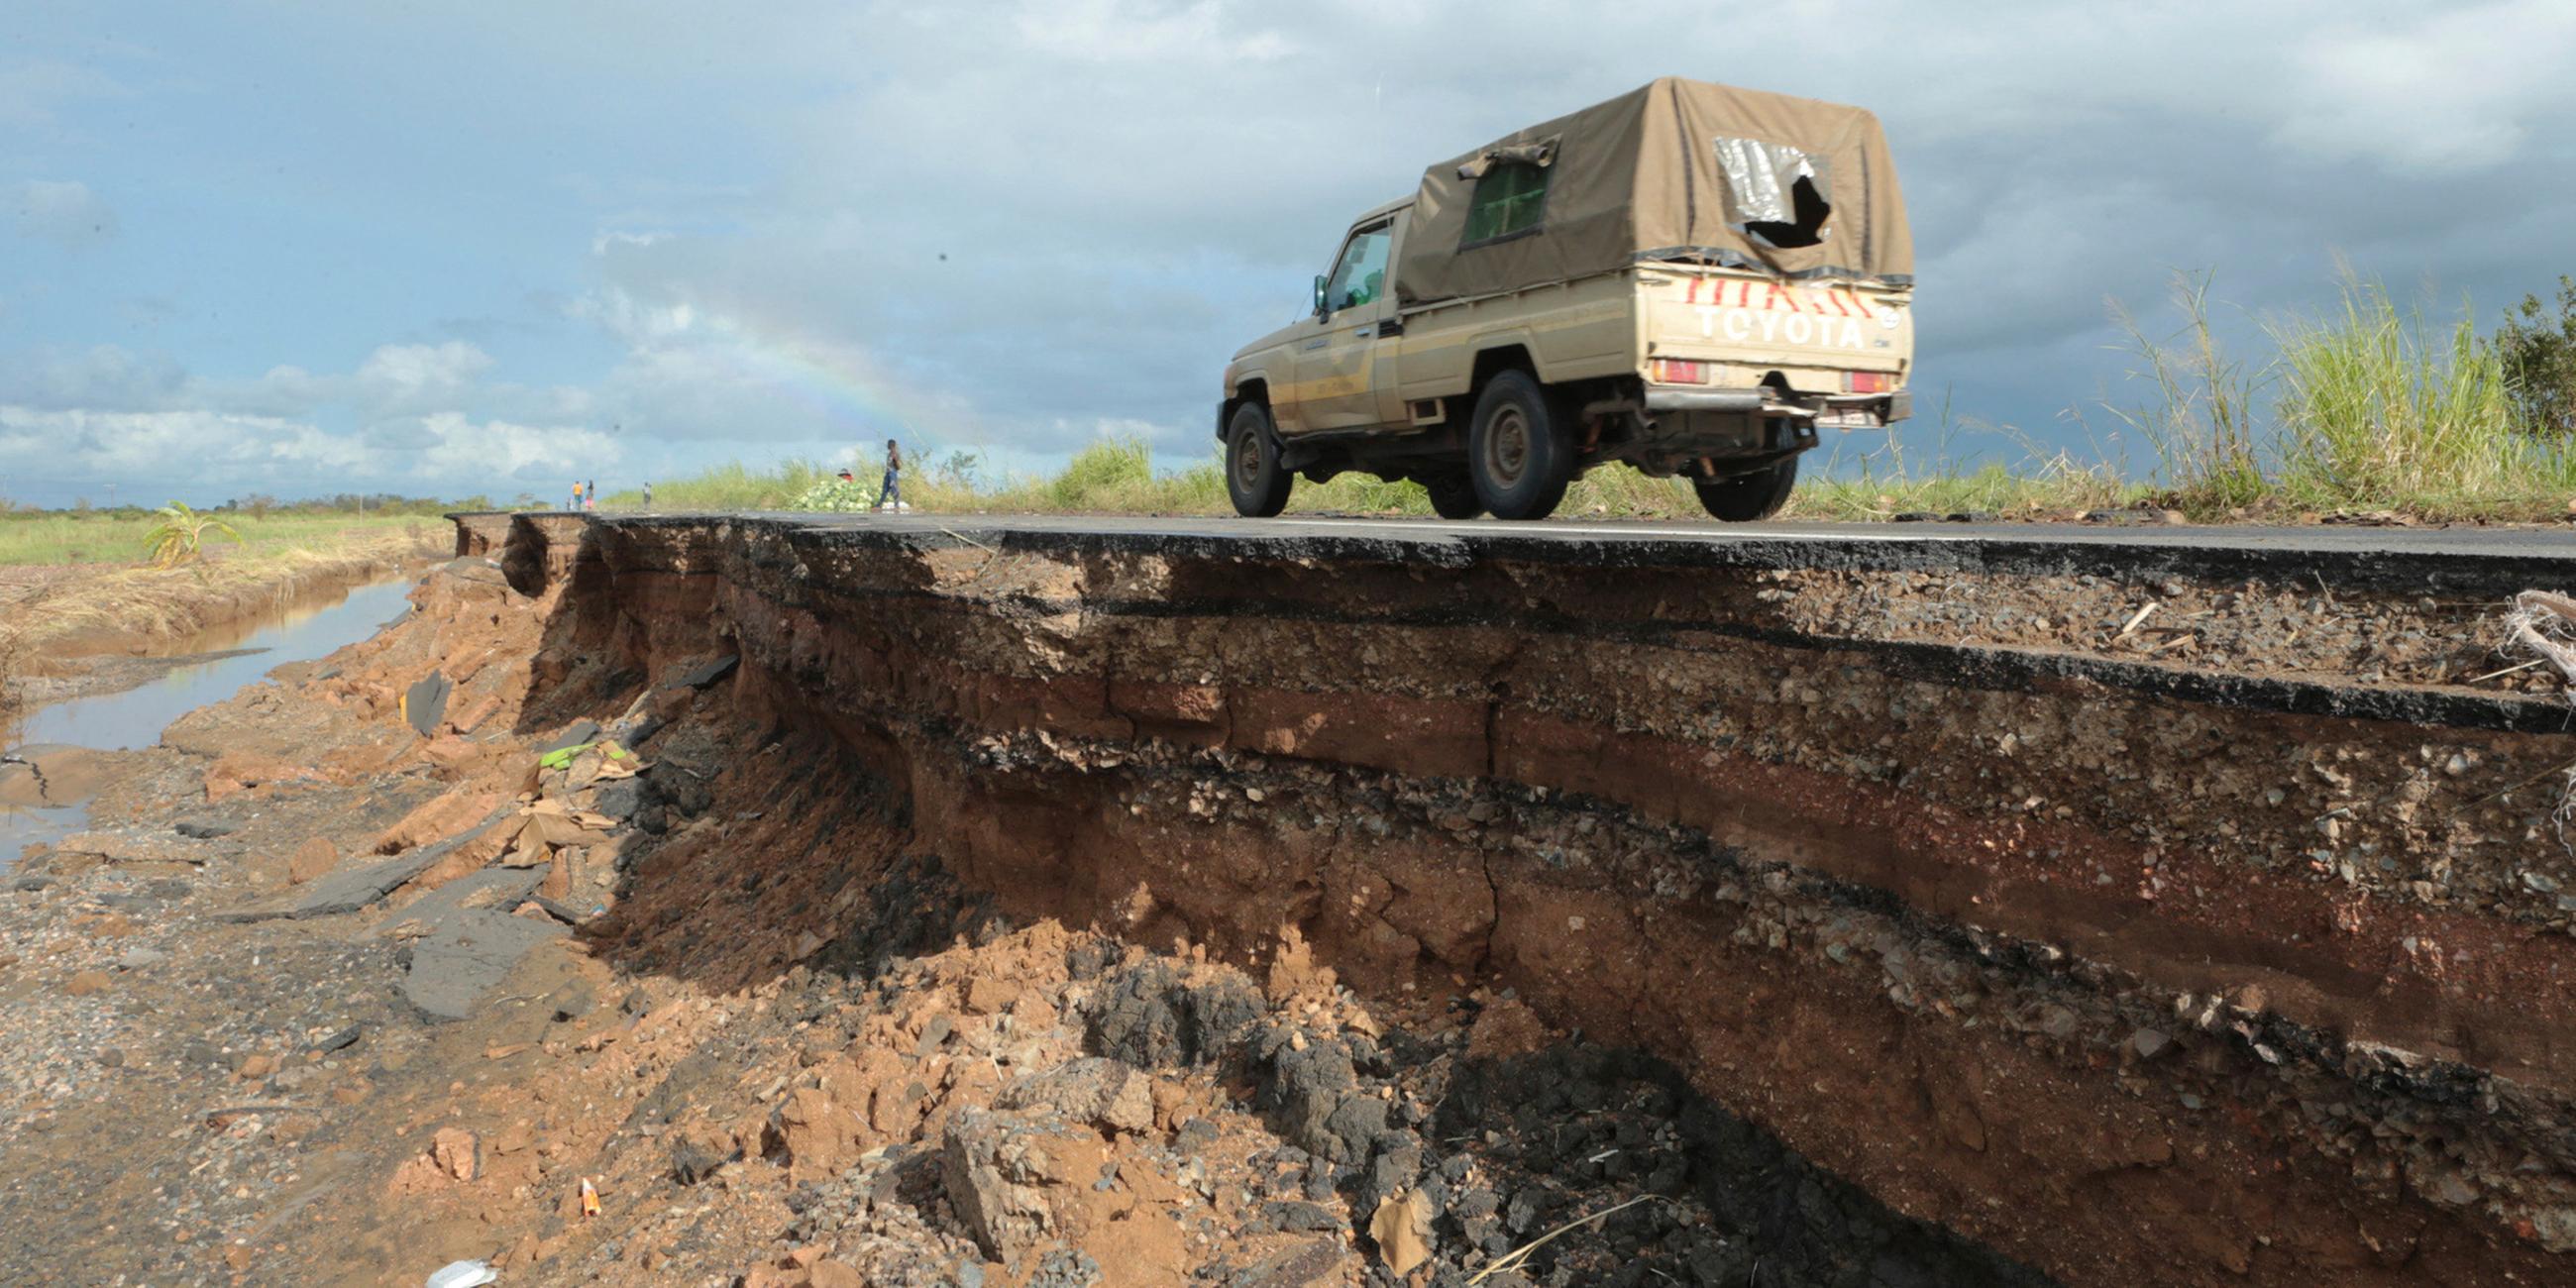 Zerstörungen durch den Wirbelsturm "Idai" in Mosambik am 21.03.2019